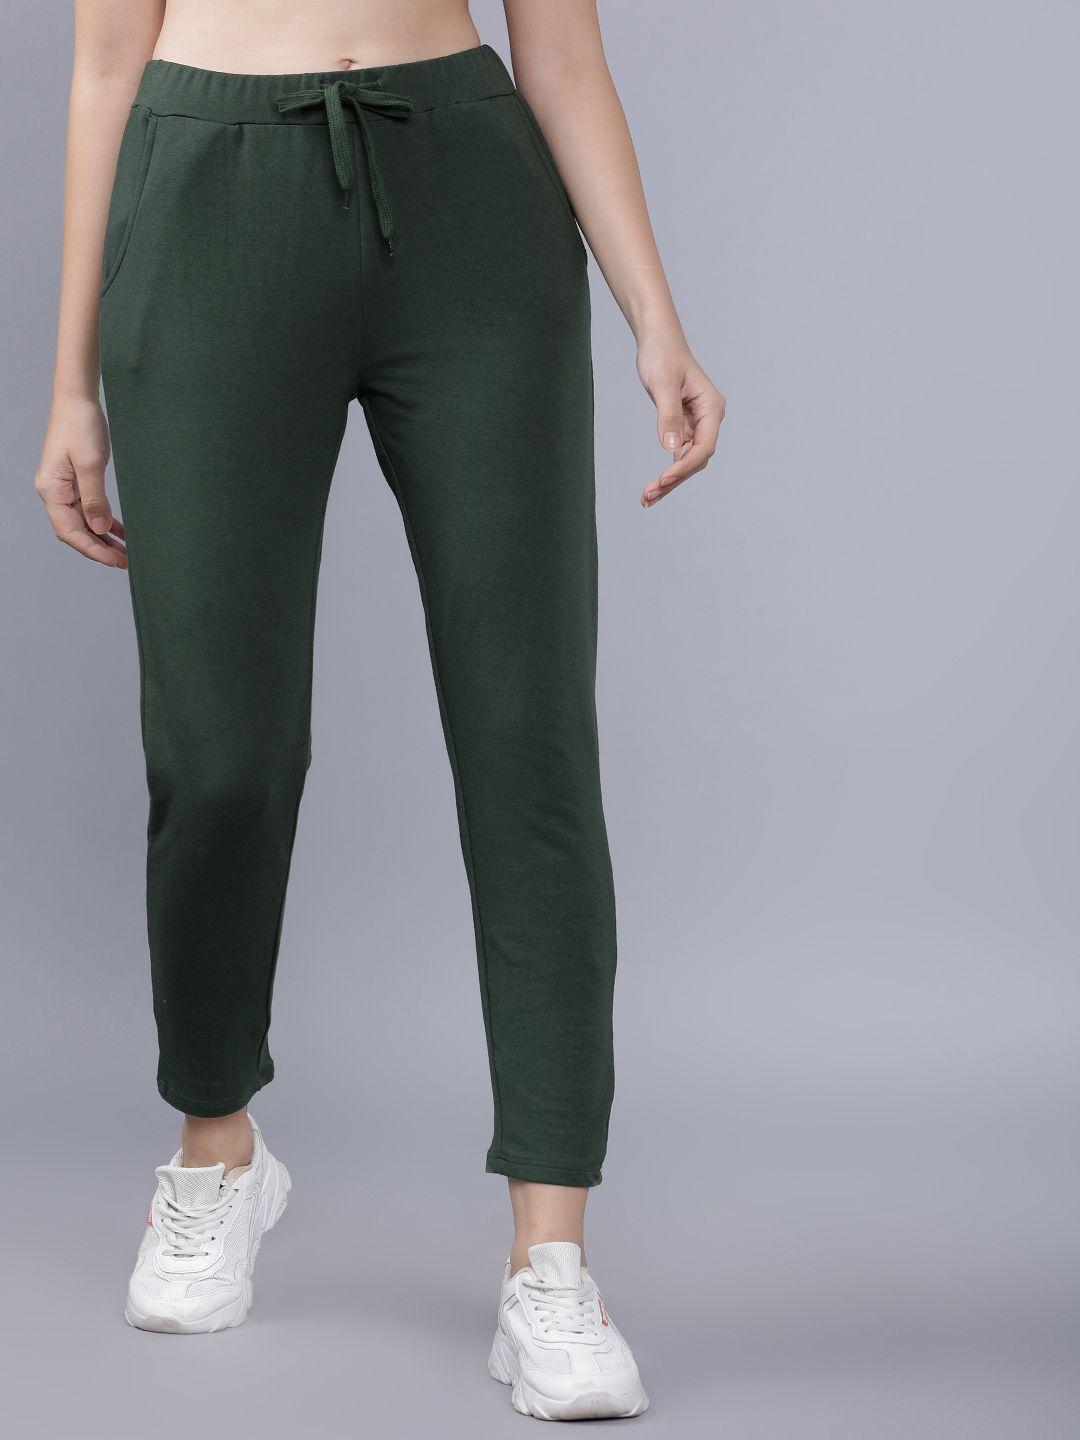 tokyo-talkies-women-olive-green-solid-slim-fit-track-pants